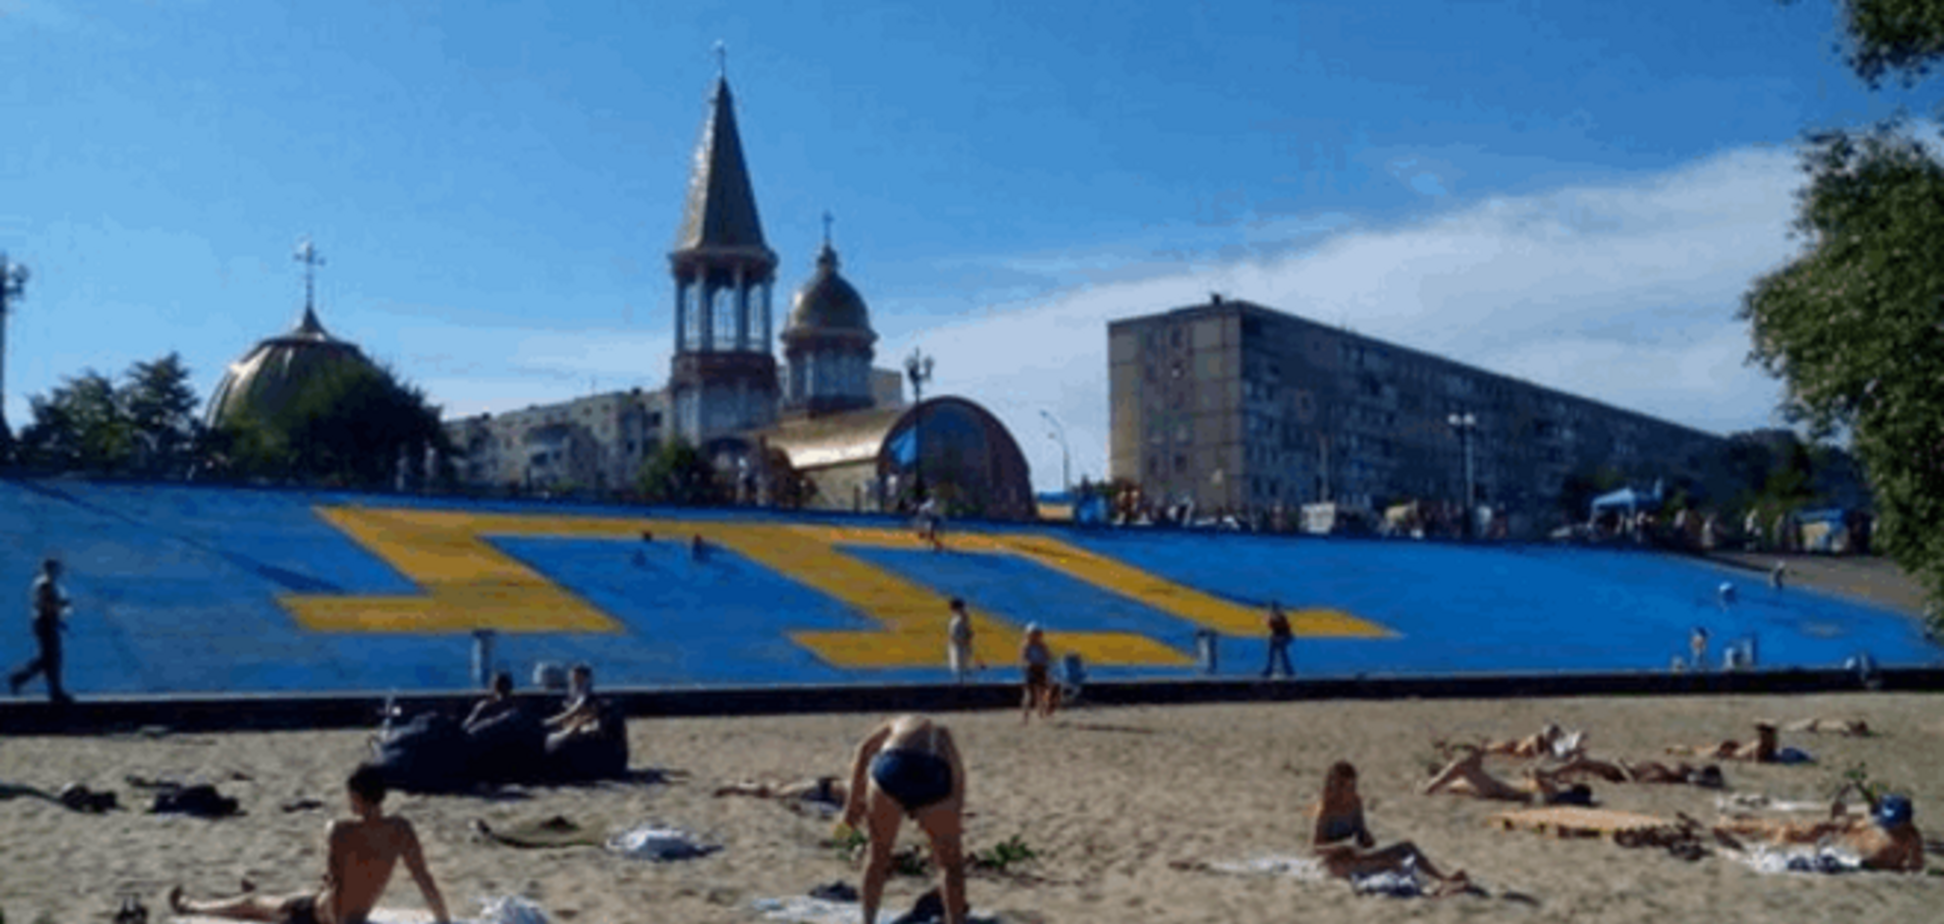 В Киеве нарисовали гигантский крымскотатарский флаг: фото и видео